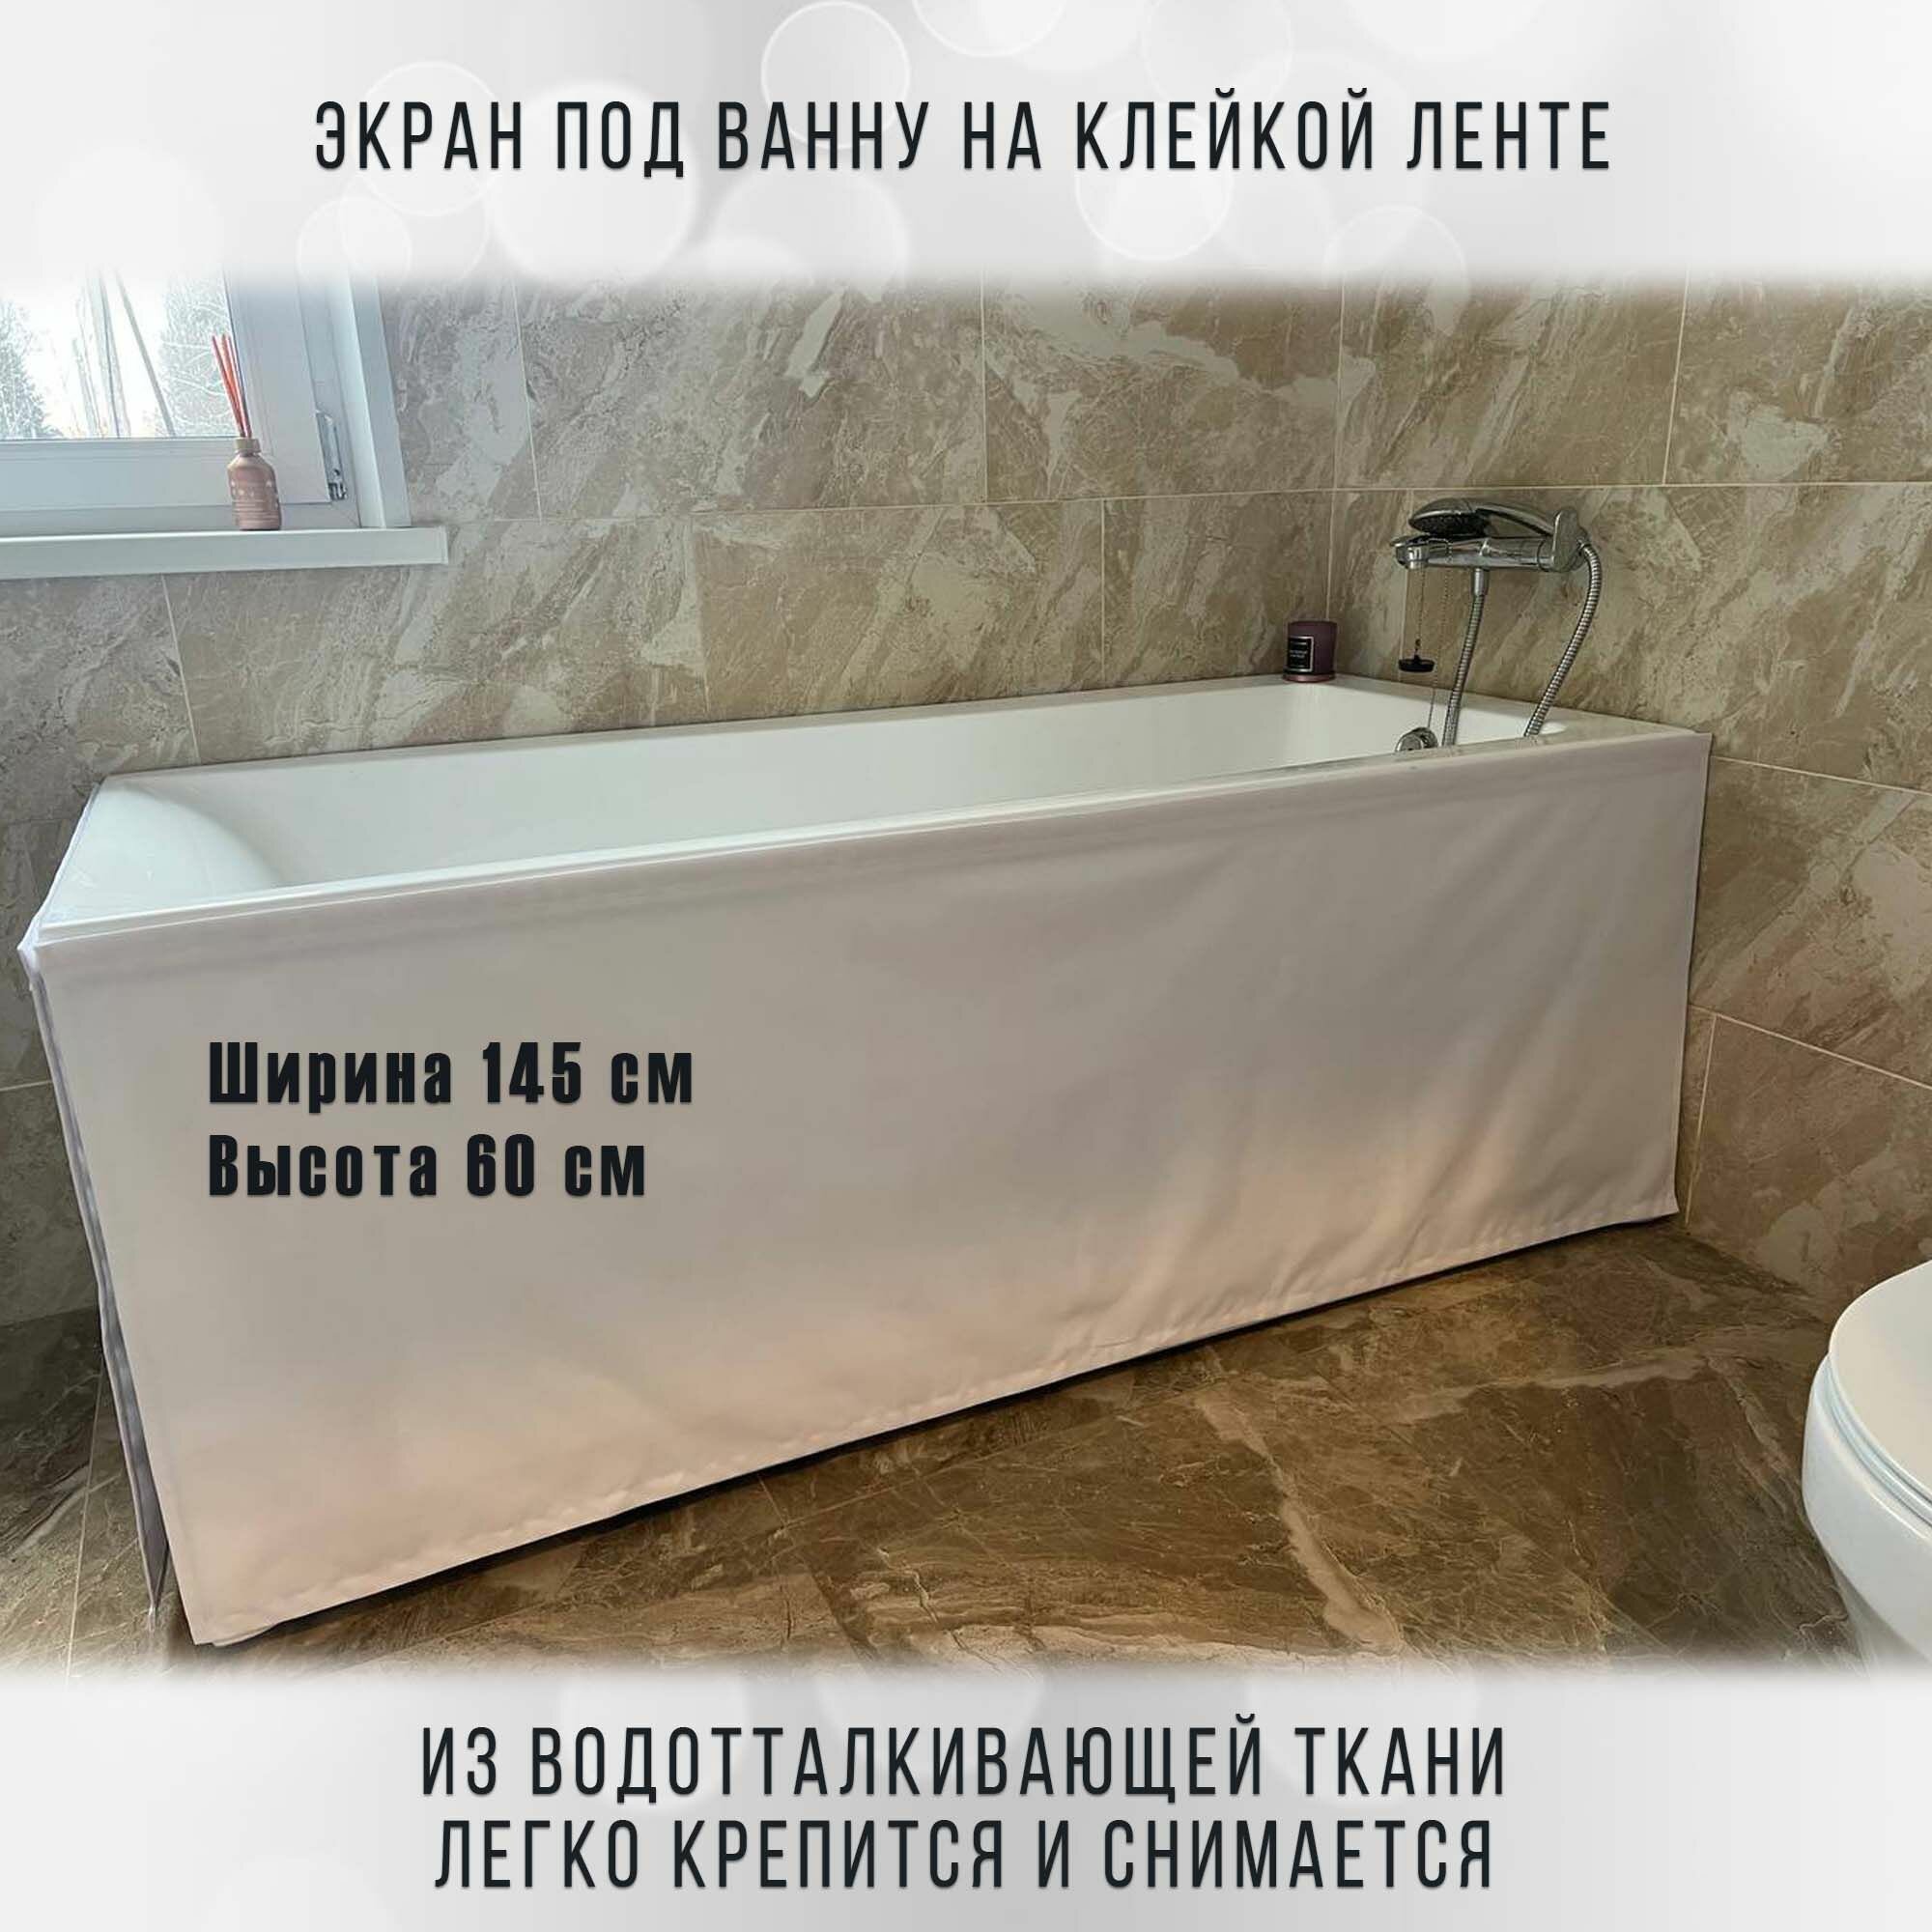 Экран для ванны, размер 145 х 60 см, водоотталкивающая ткань, крепление без монтажа